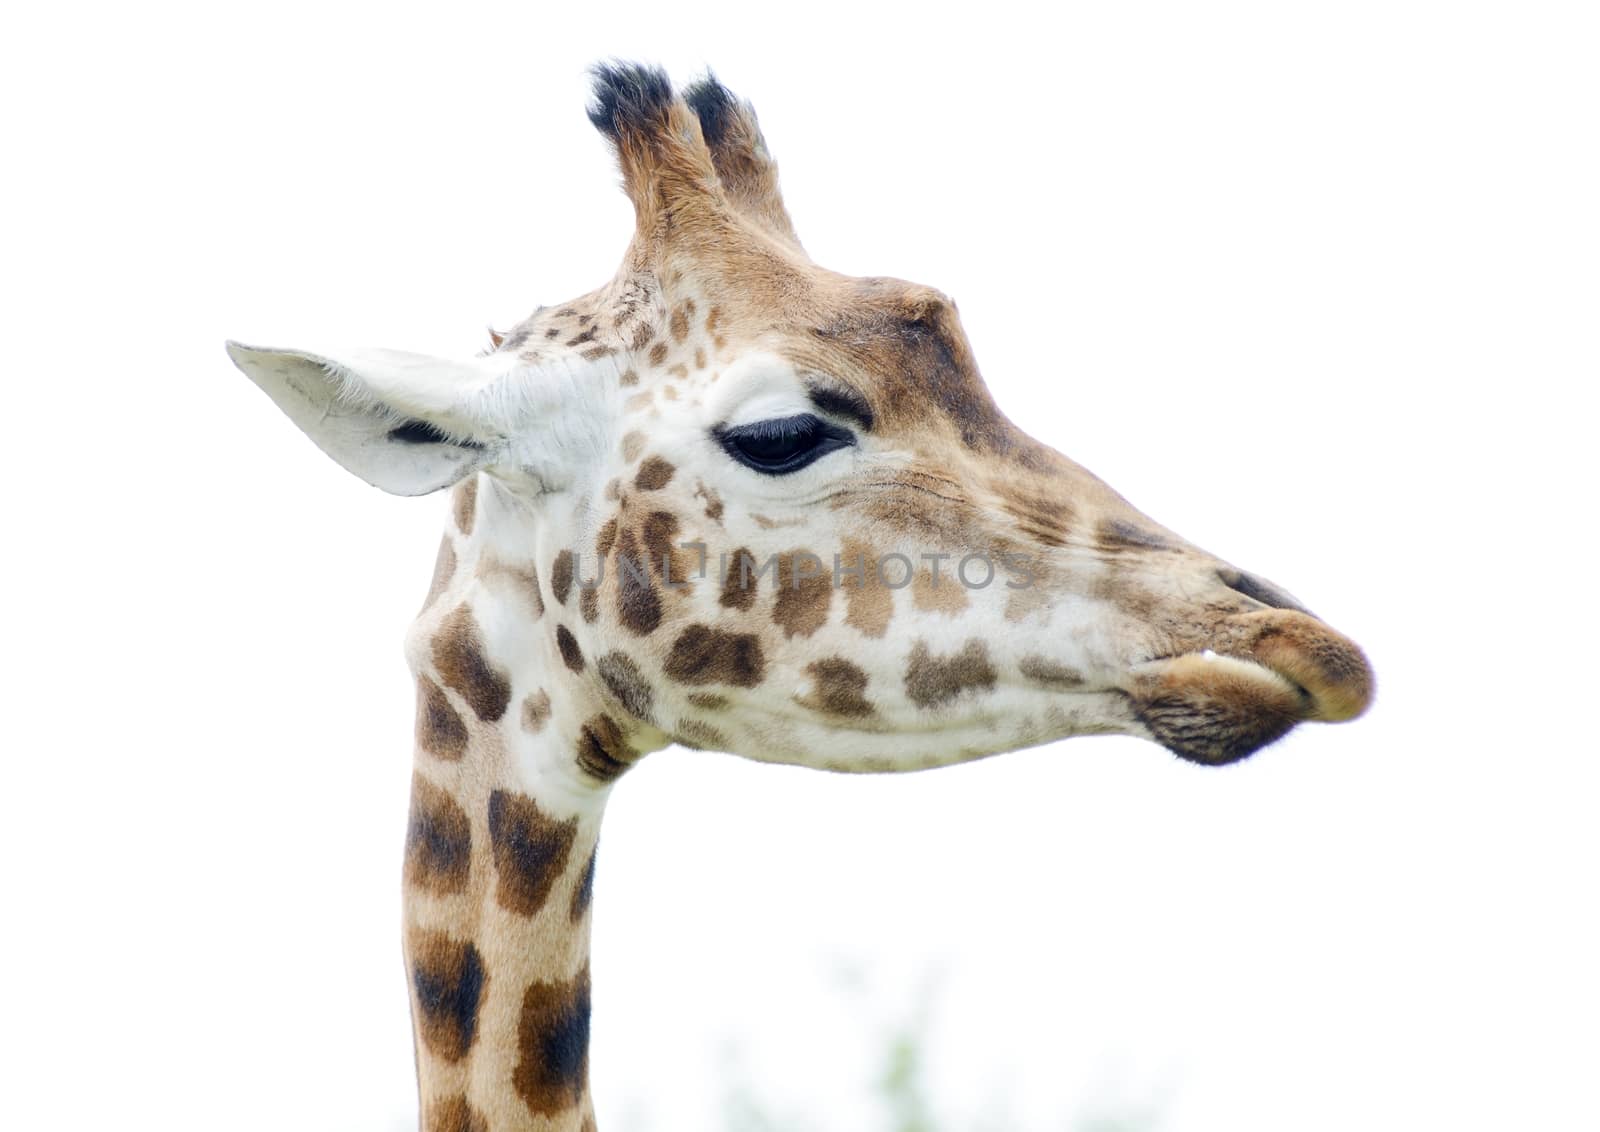 Giraffe profile in closeup showing head and long neck detail